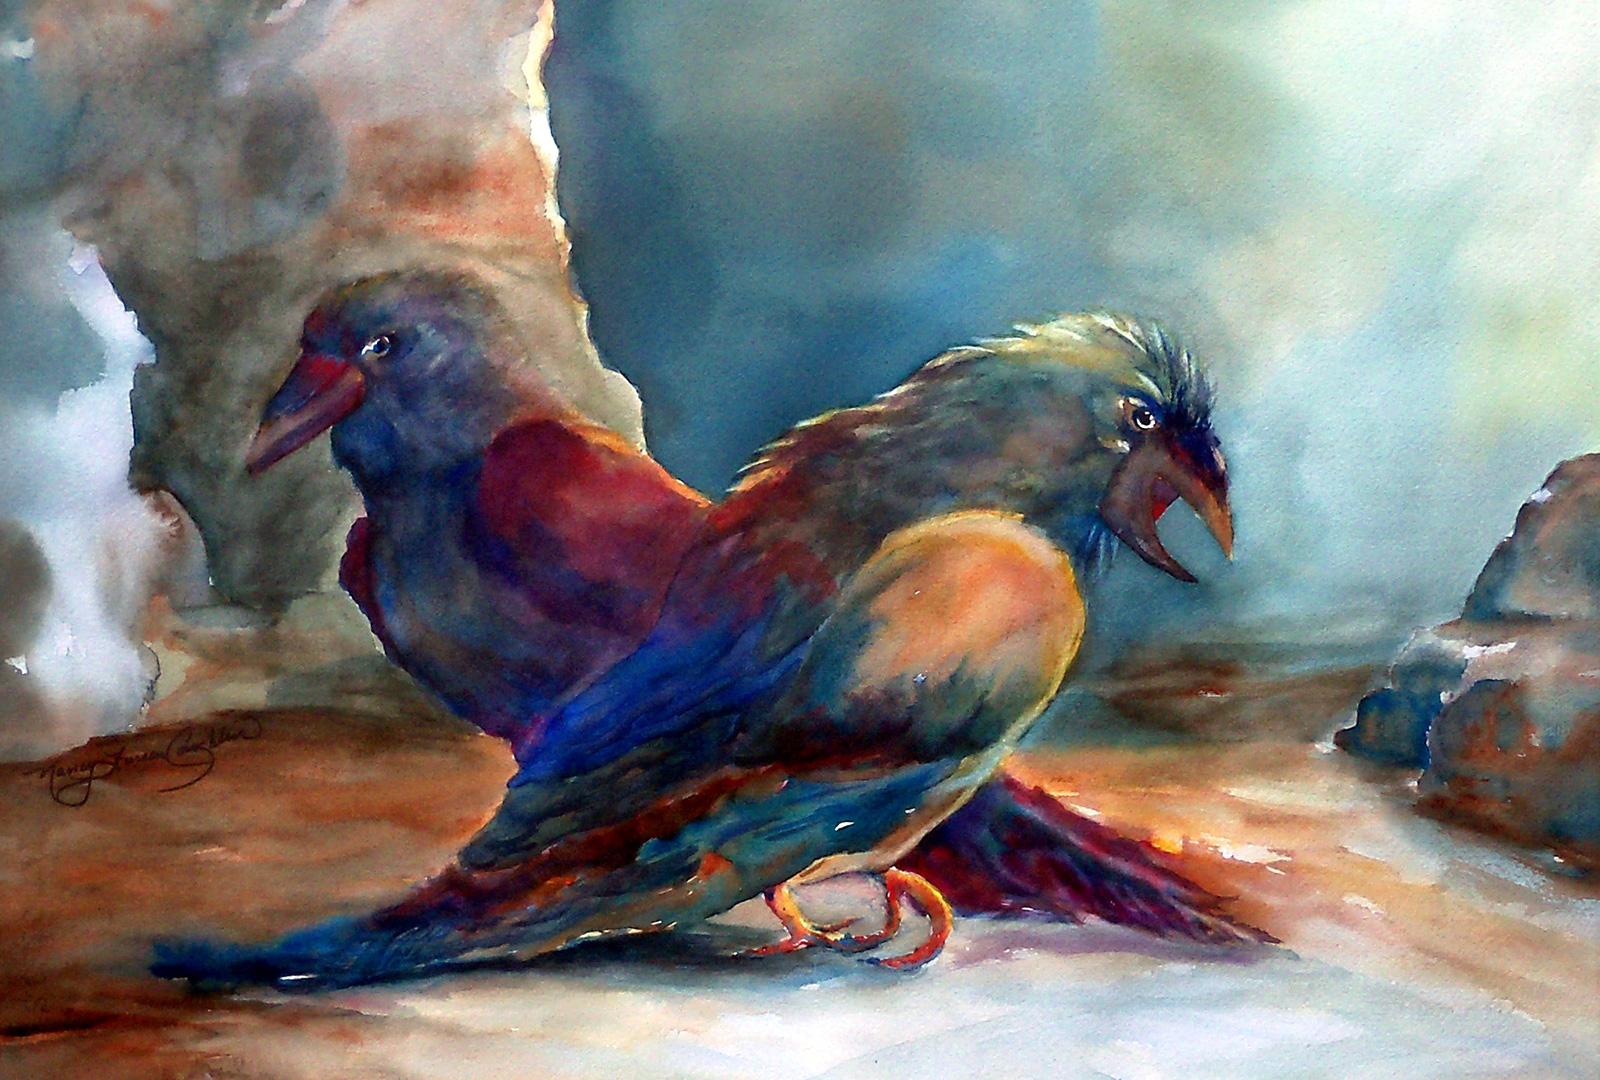 Ravens Rock, Watercolor on paper, 18 x 24